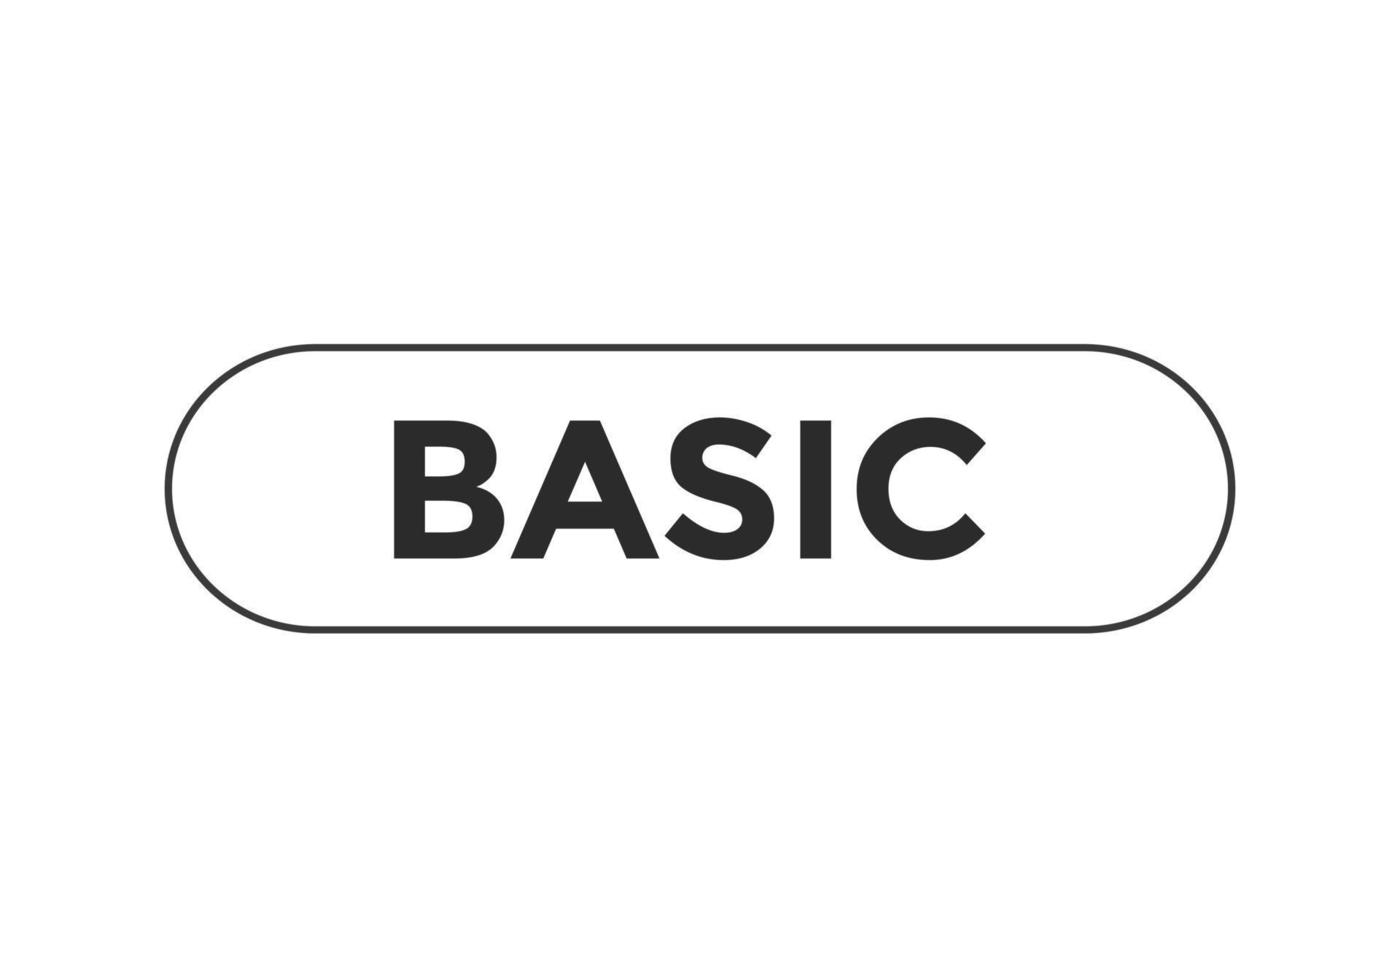 basic text button web button sign icon label vector